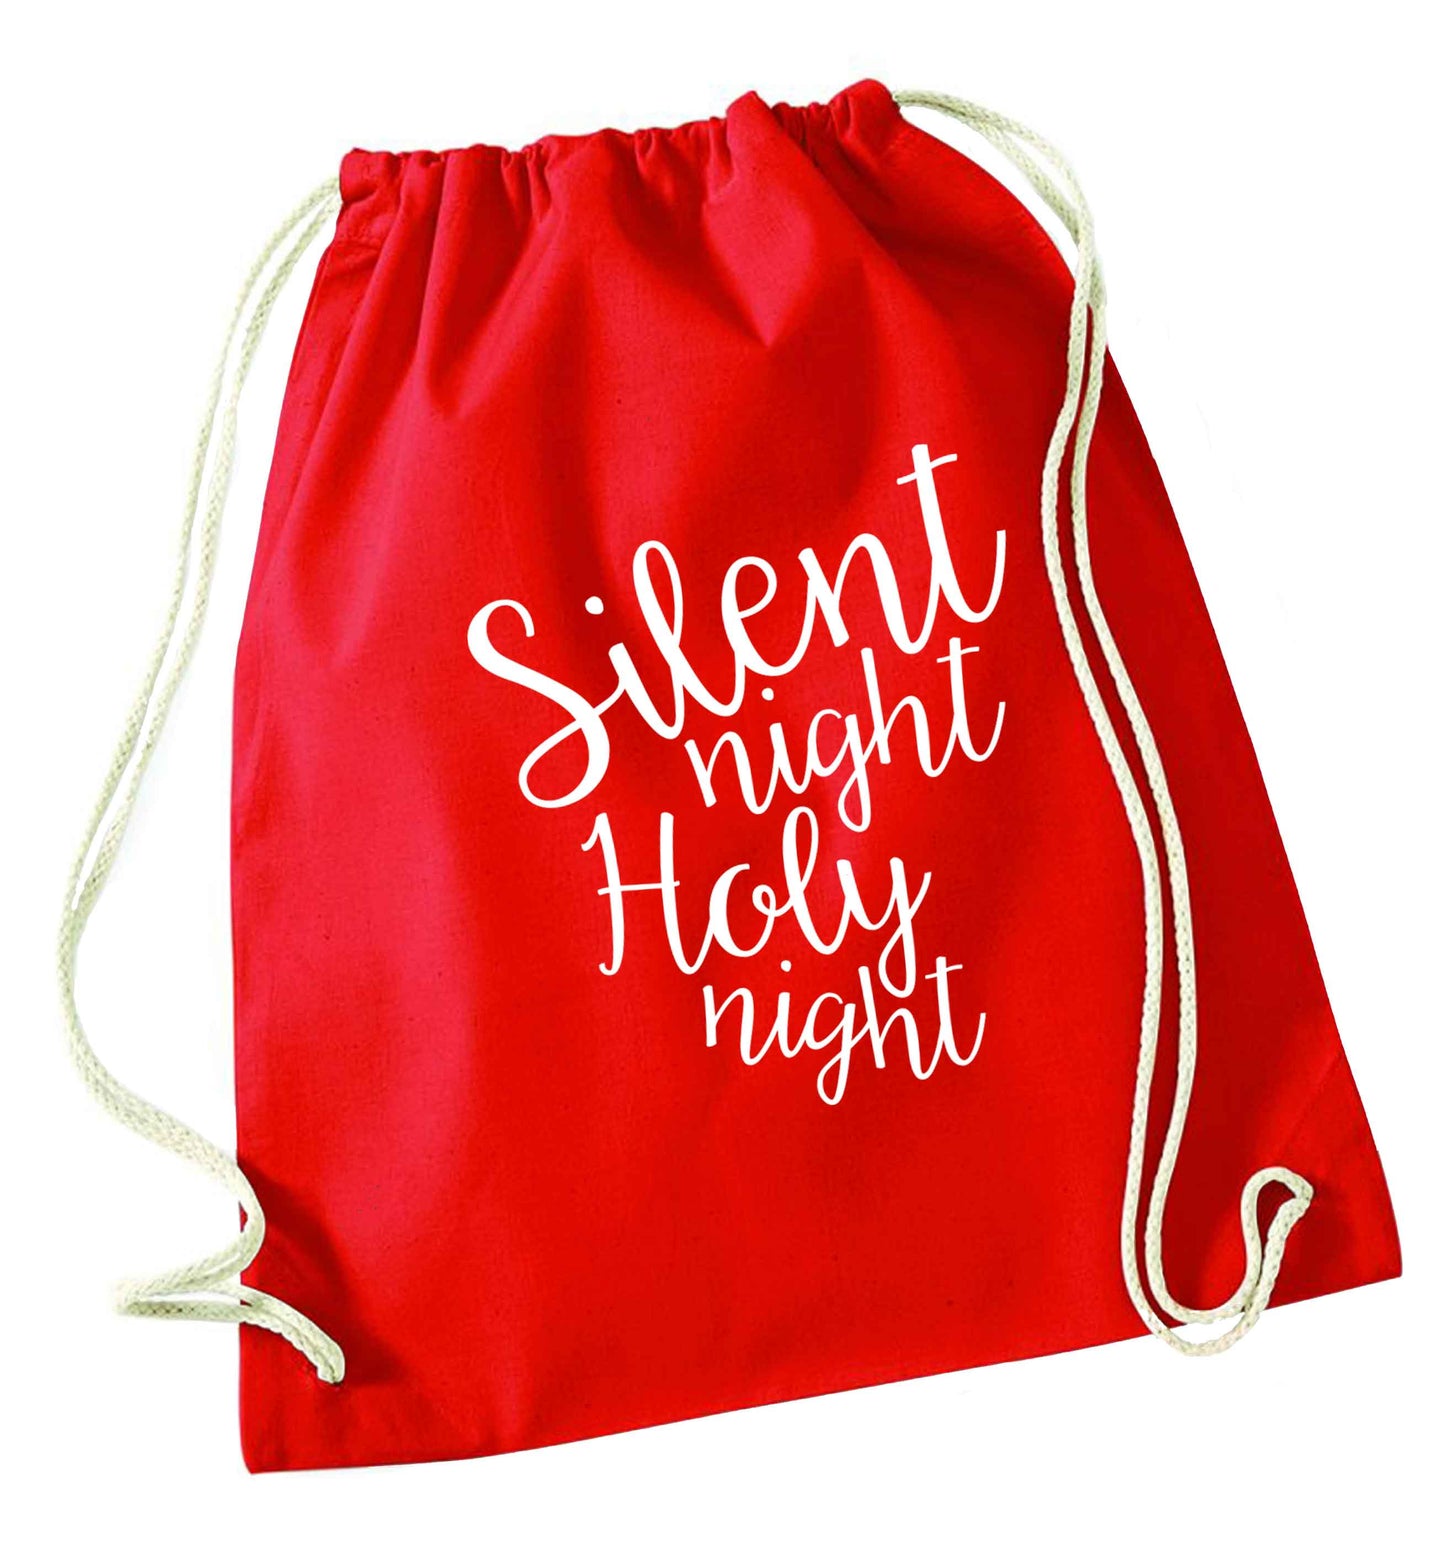 Silent night holy night red drawstring bag 